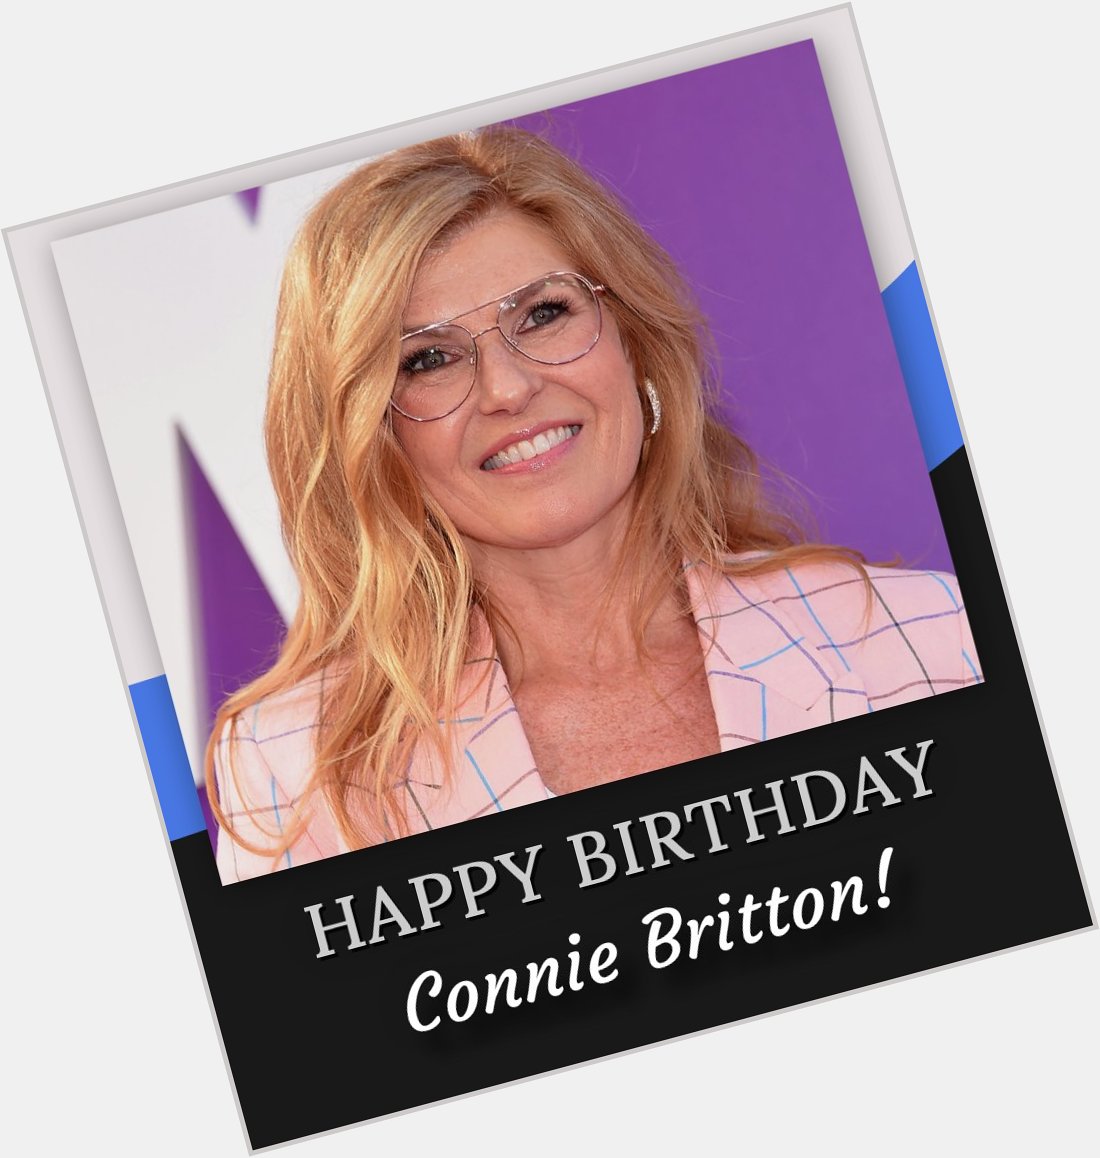 Happy birthday Connie Britton! 